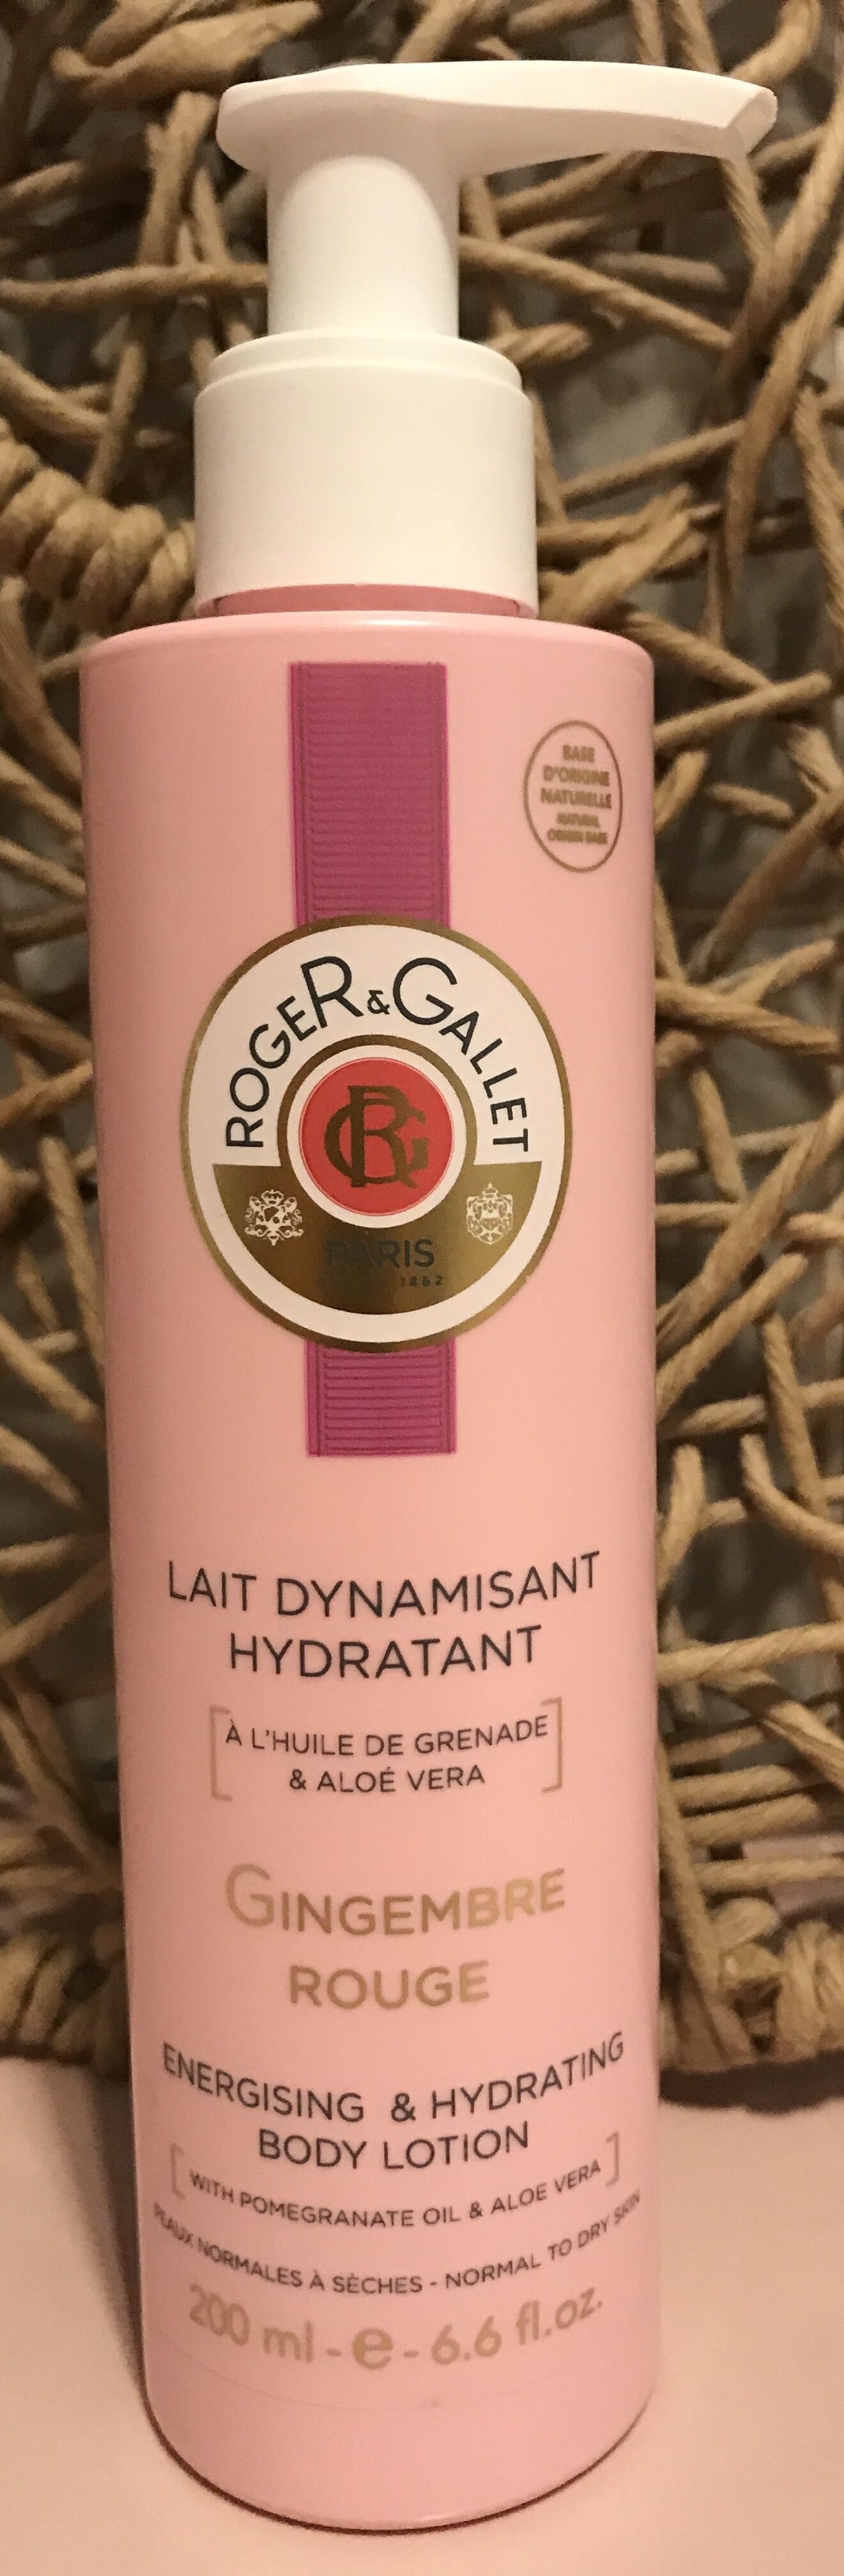 Lait dynamisant hydratant Gingembre Rouge - Product - fr